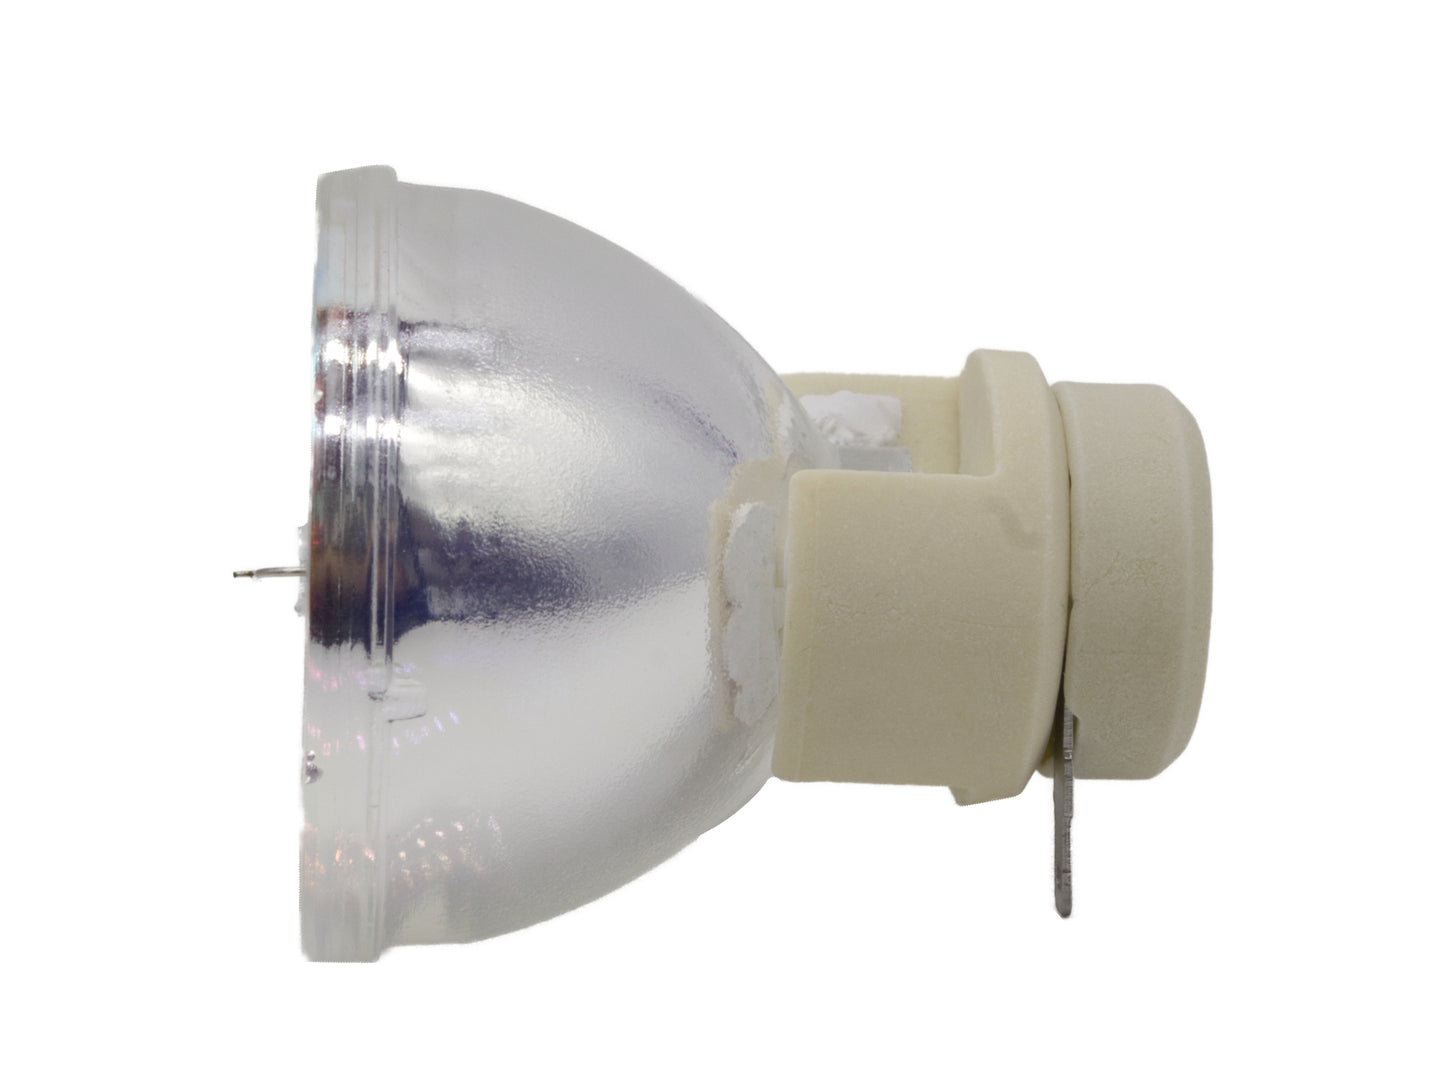 azurano Beamerlampe für ACER MC.JMV11.001 Ersatzlampe Projektorlampe - Bild 2